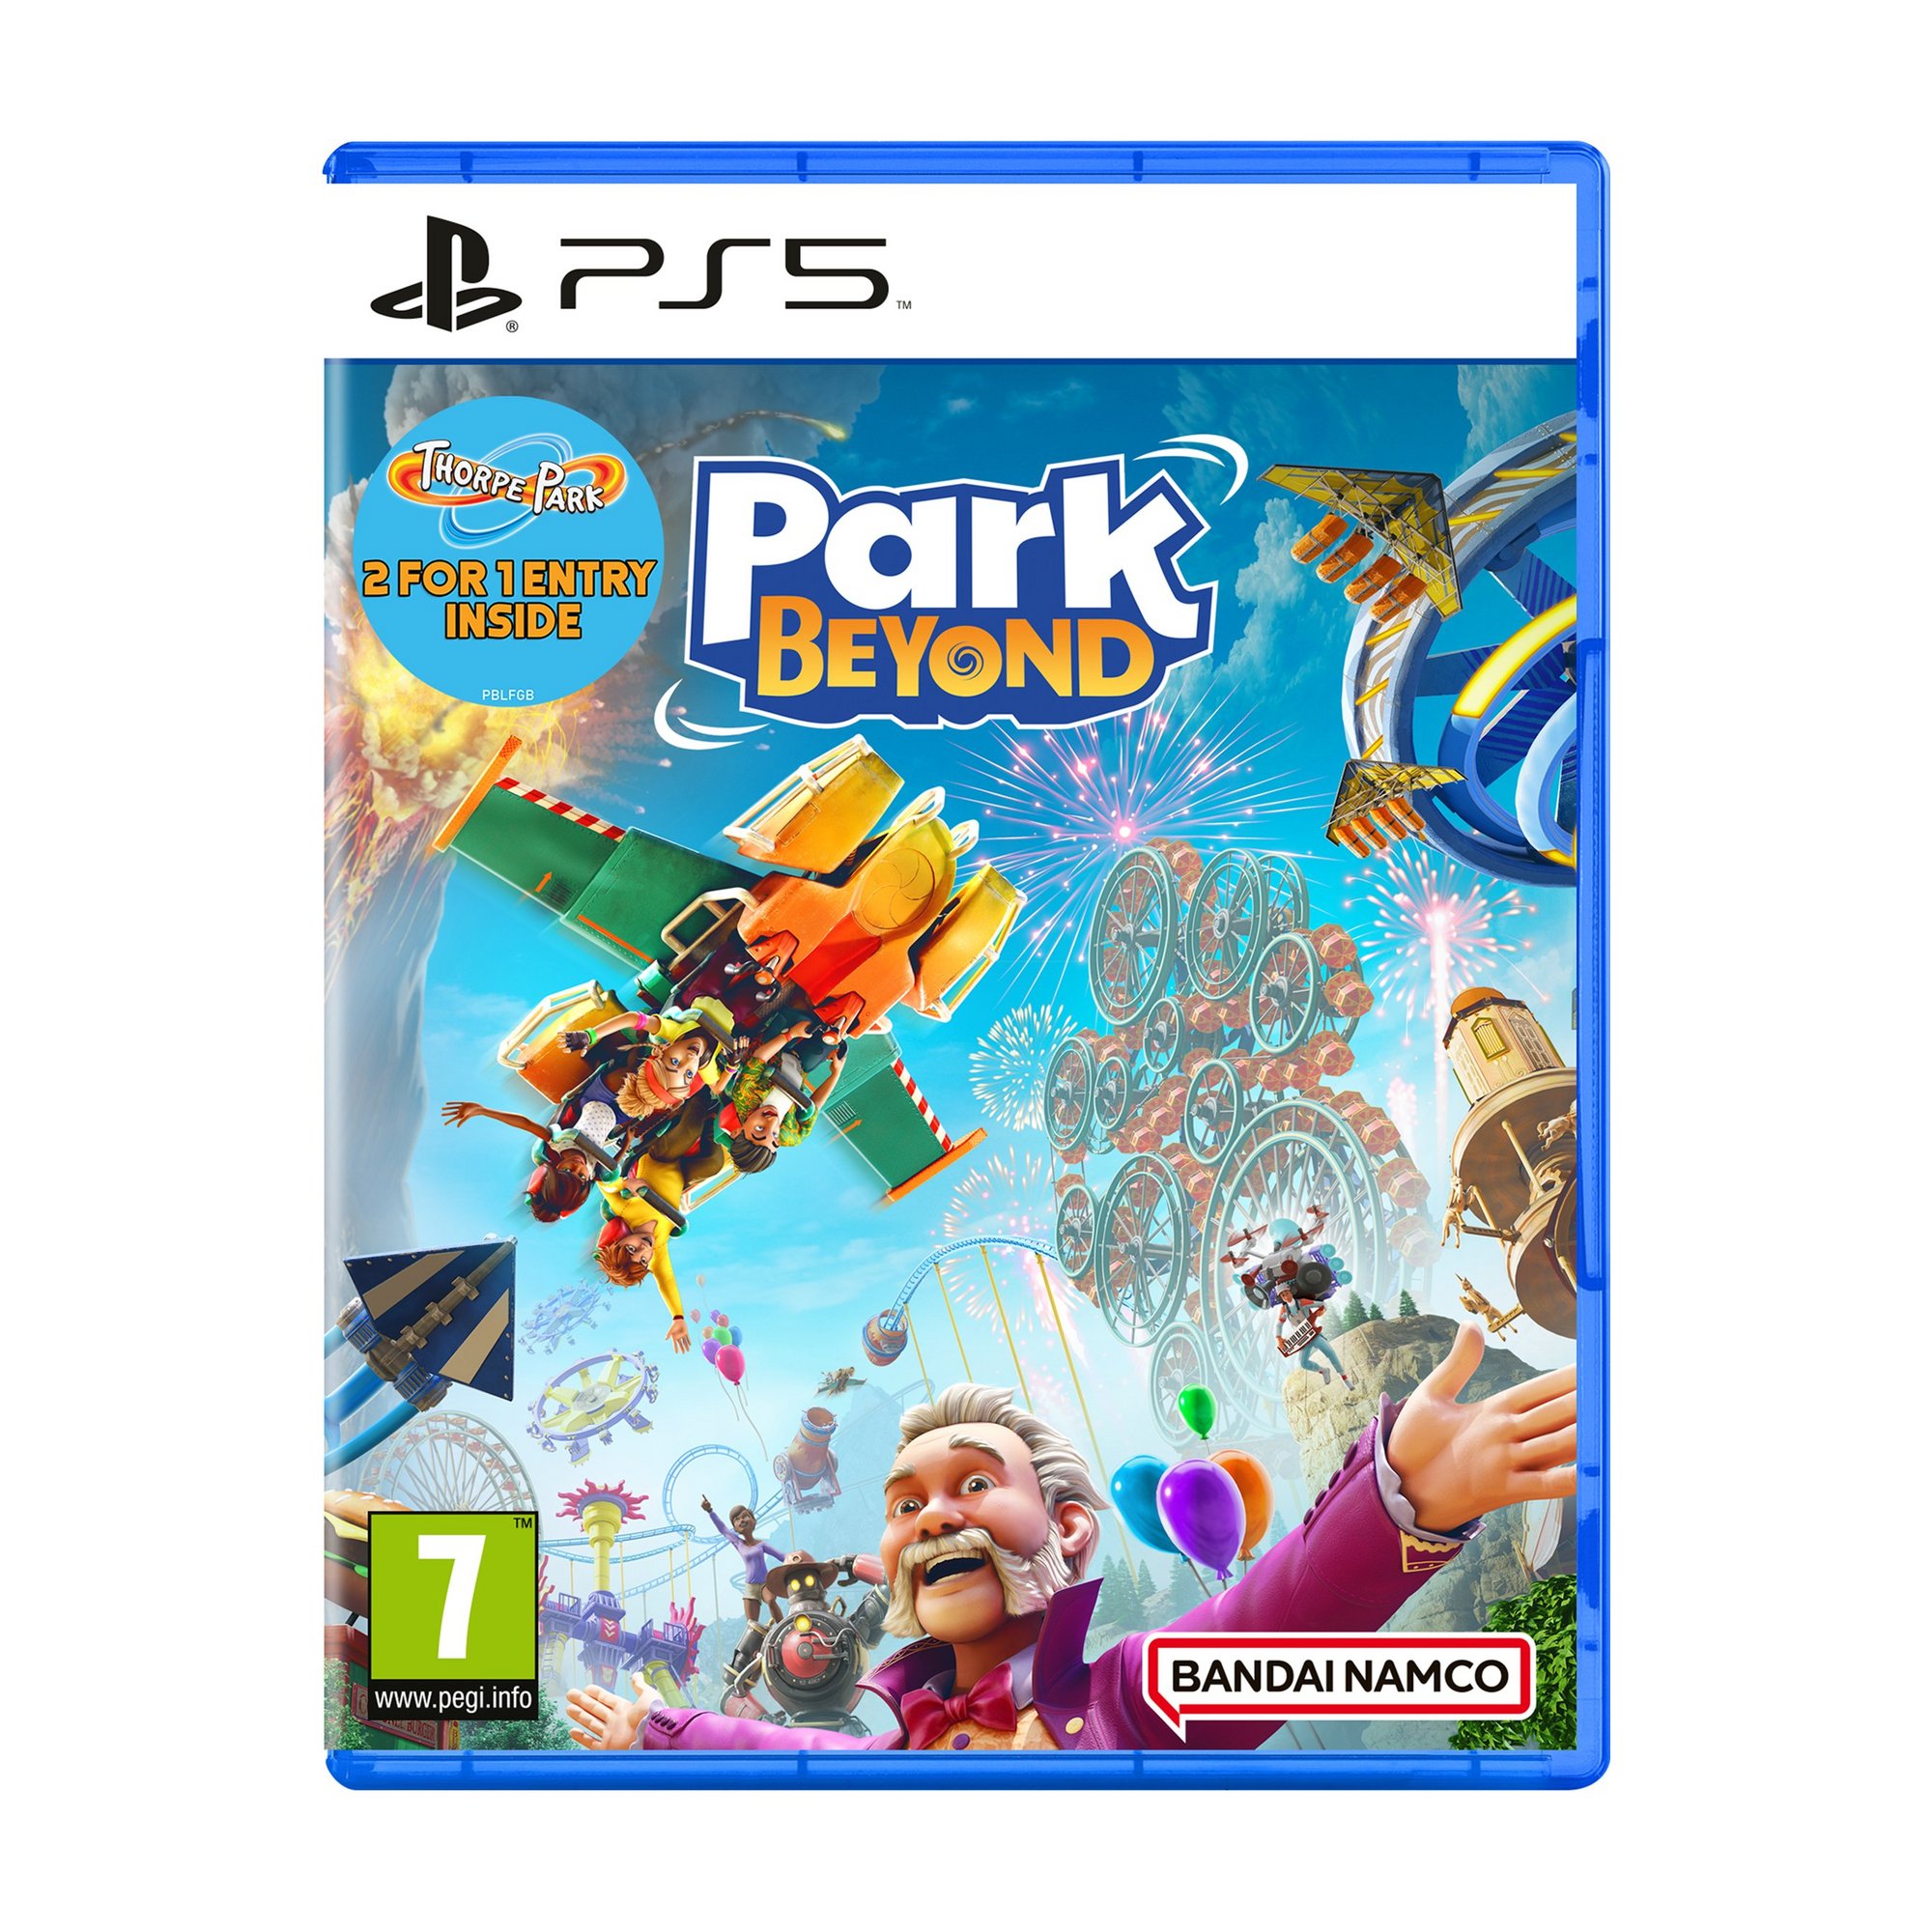 Sony PS5: PRE ORDER Park Beyond